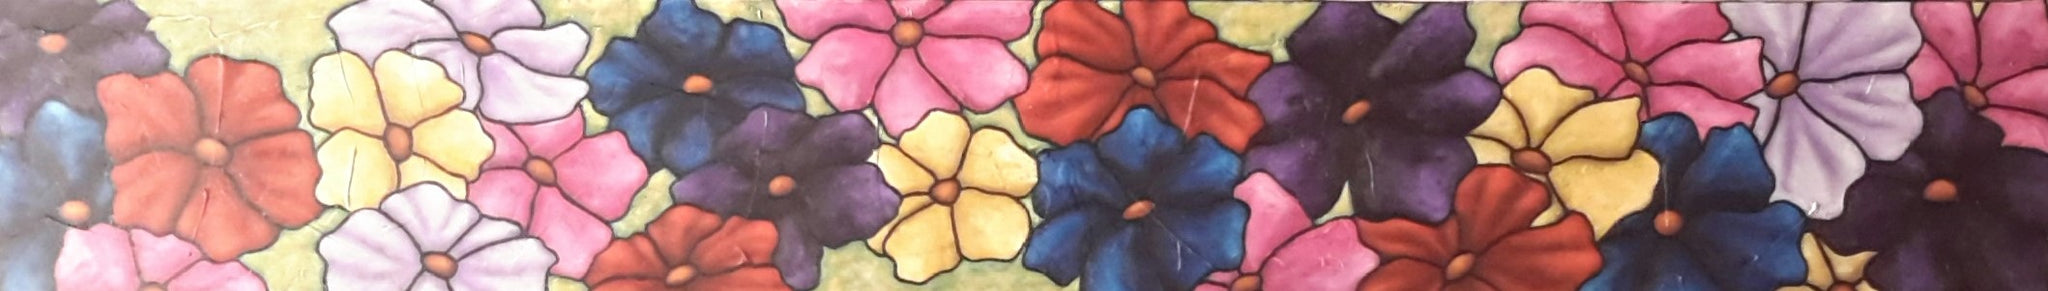 Bloom #3 Acrylic Paint on Canvas Art Original